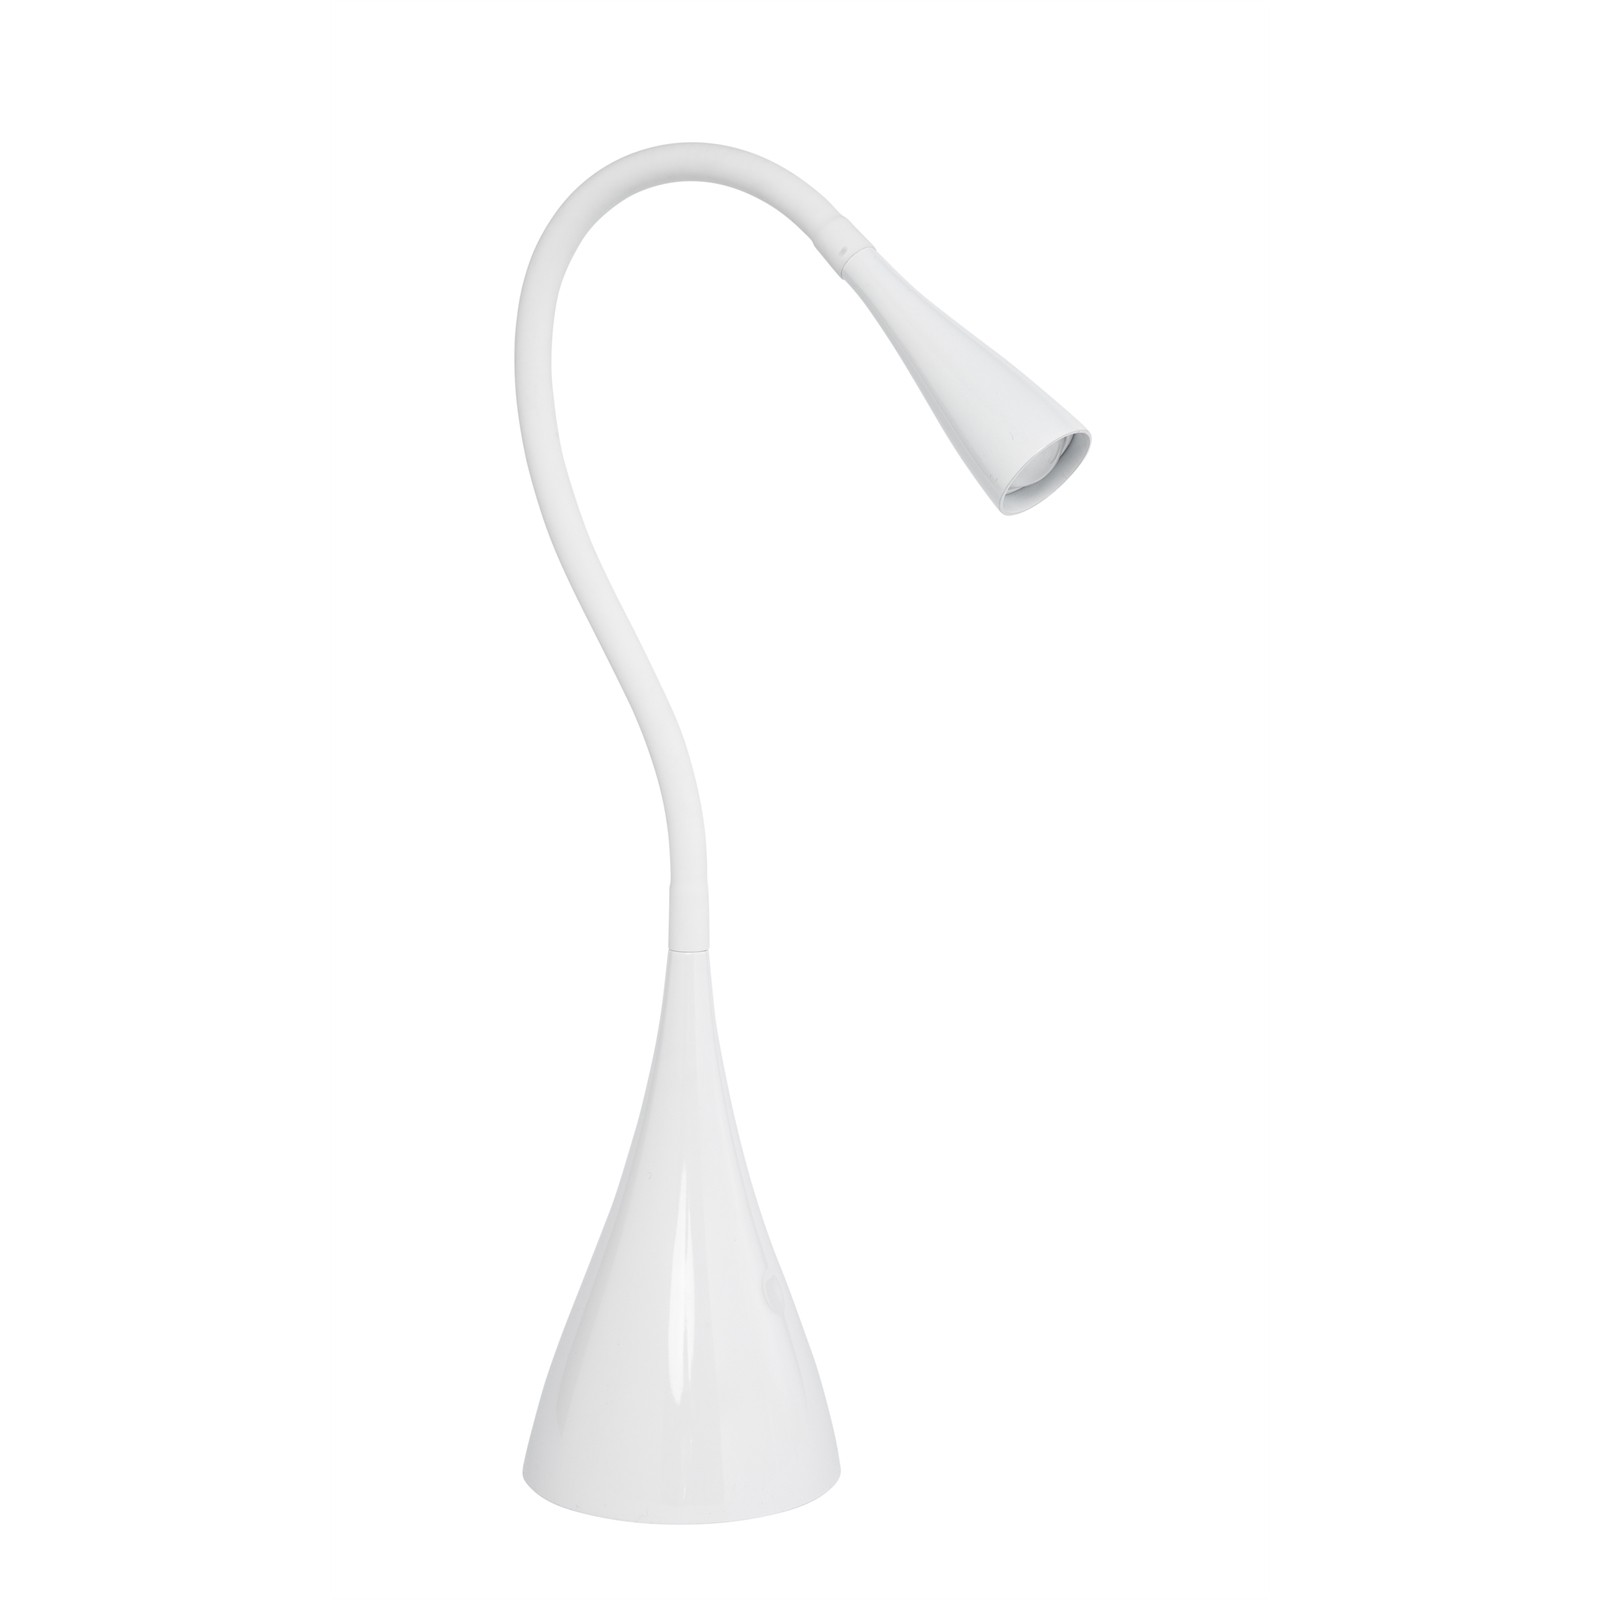 Brilliant 3W LED White Swanny Desk Lamp